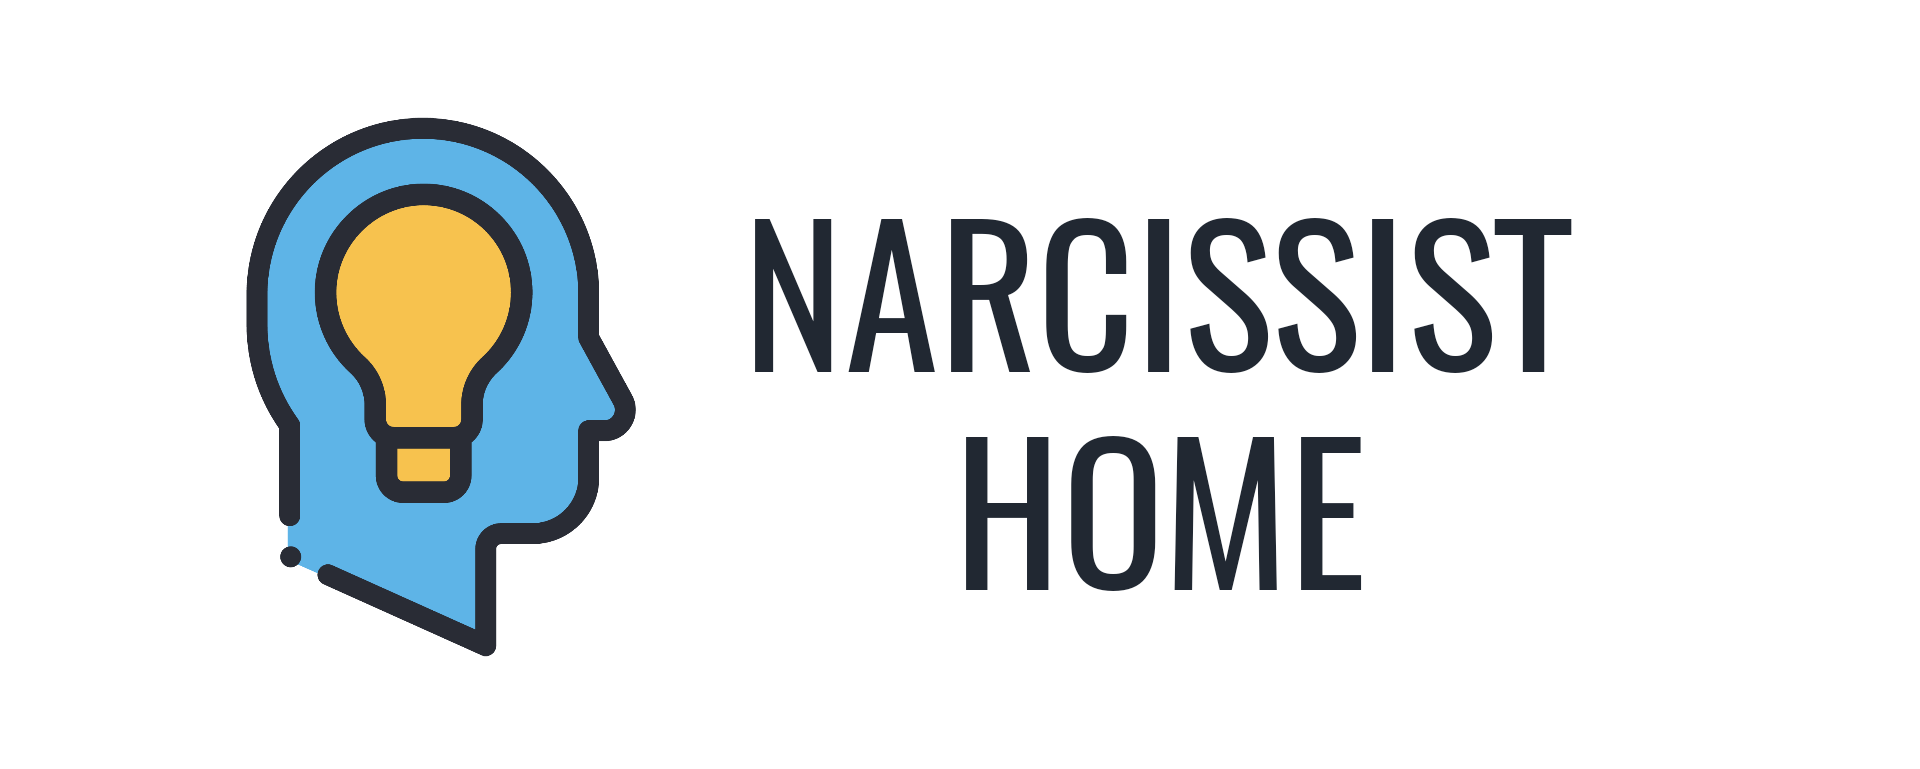 narcissist home